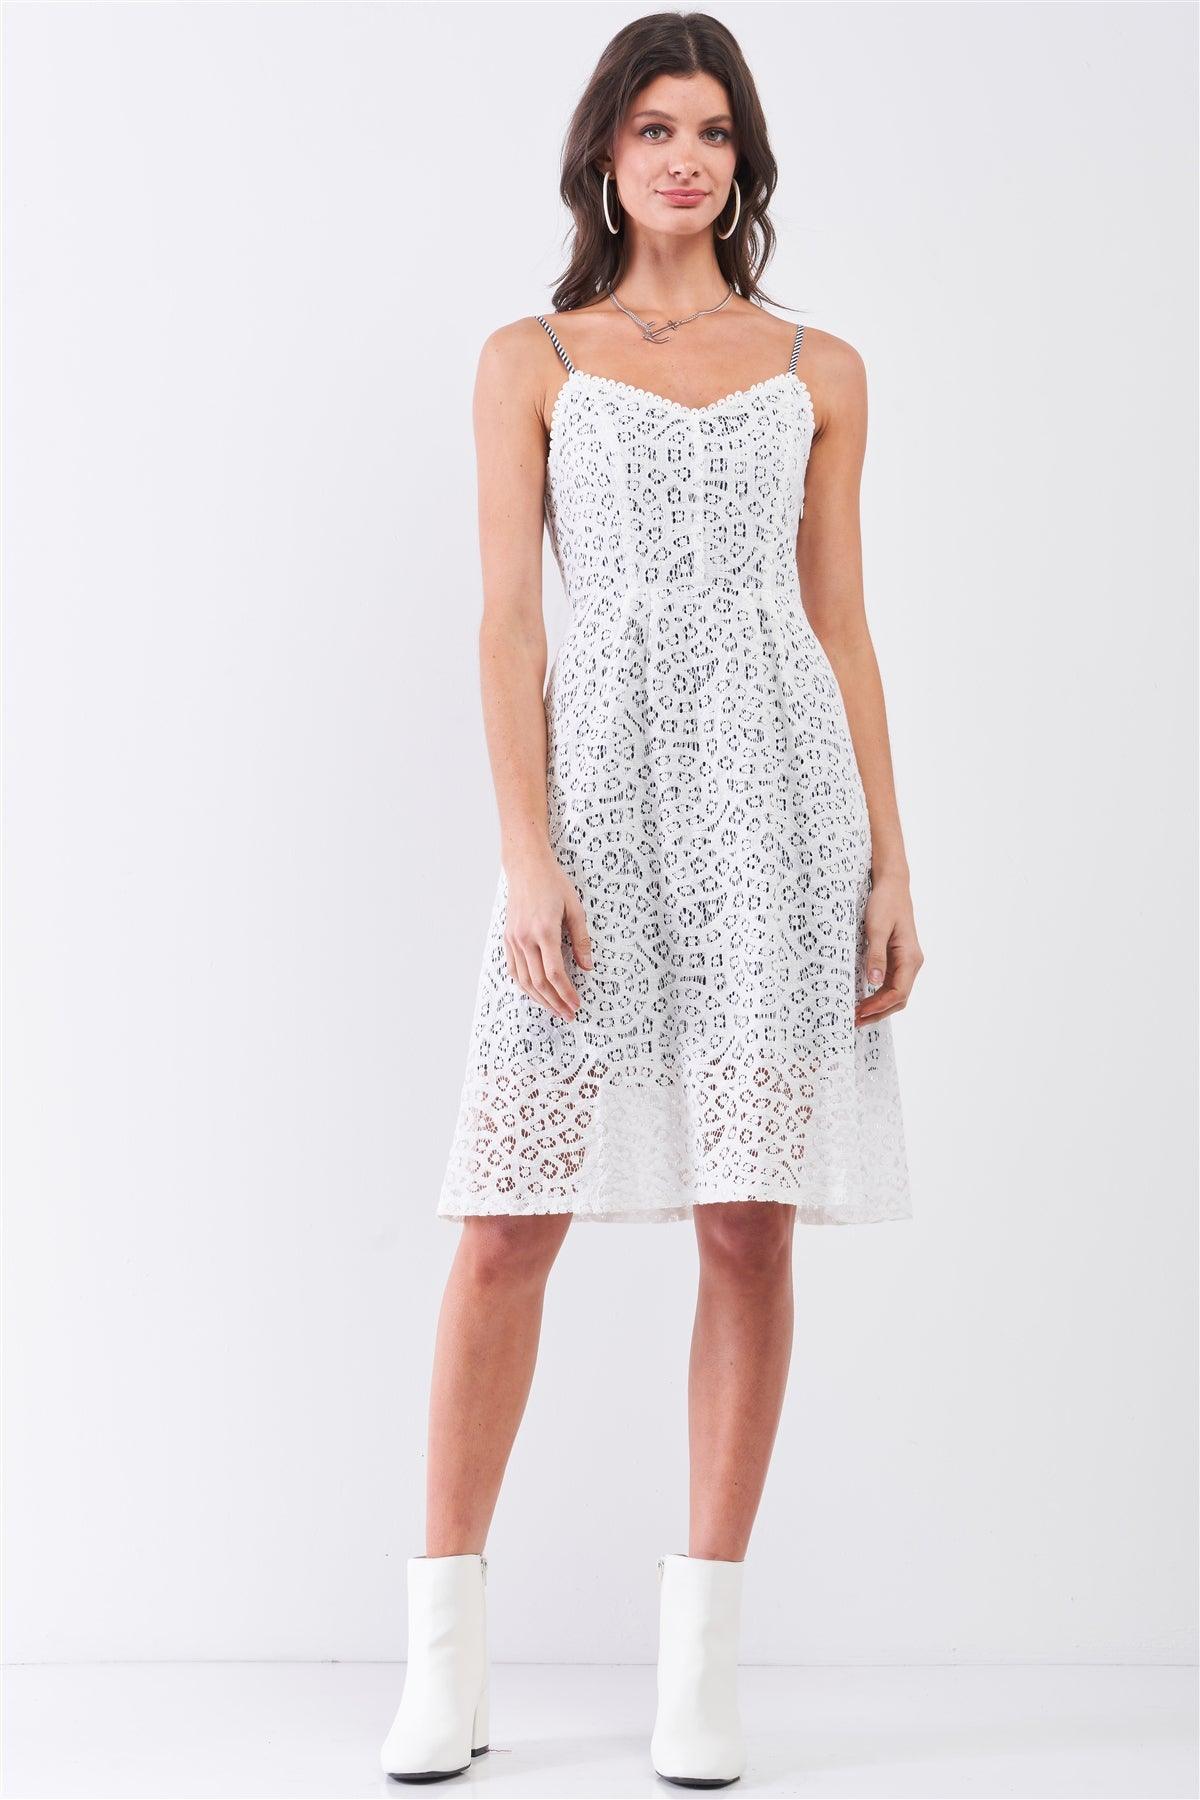 White Crochet Sleeveless Soft V-Neck Double Lined With White & Navy Mini Dress /1-3-2